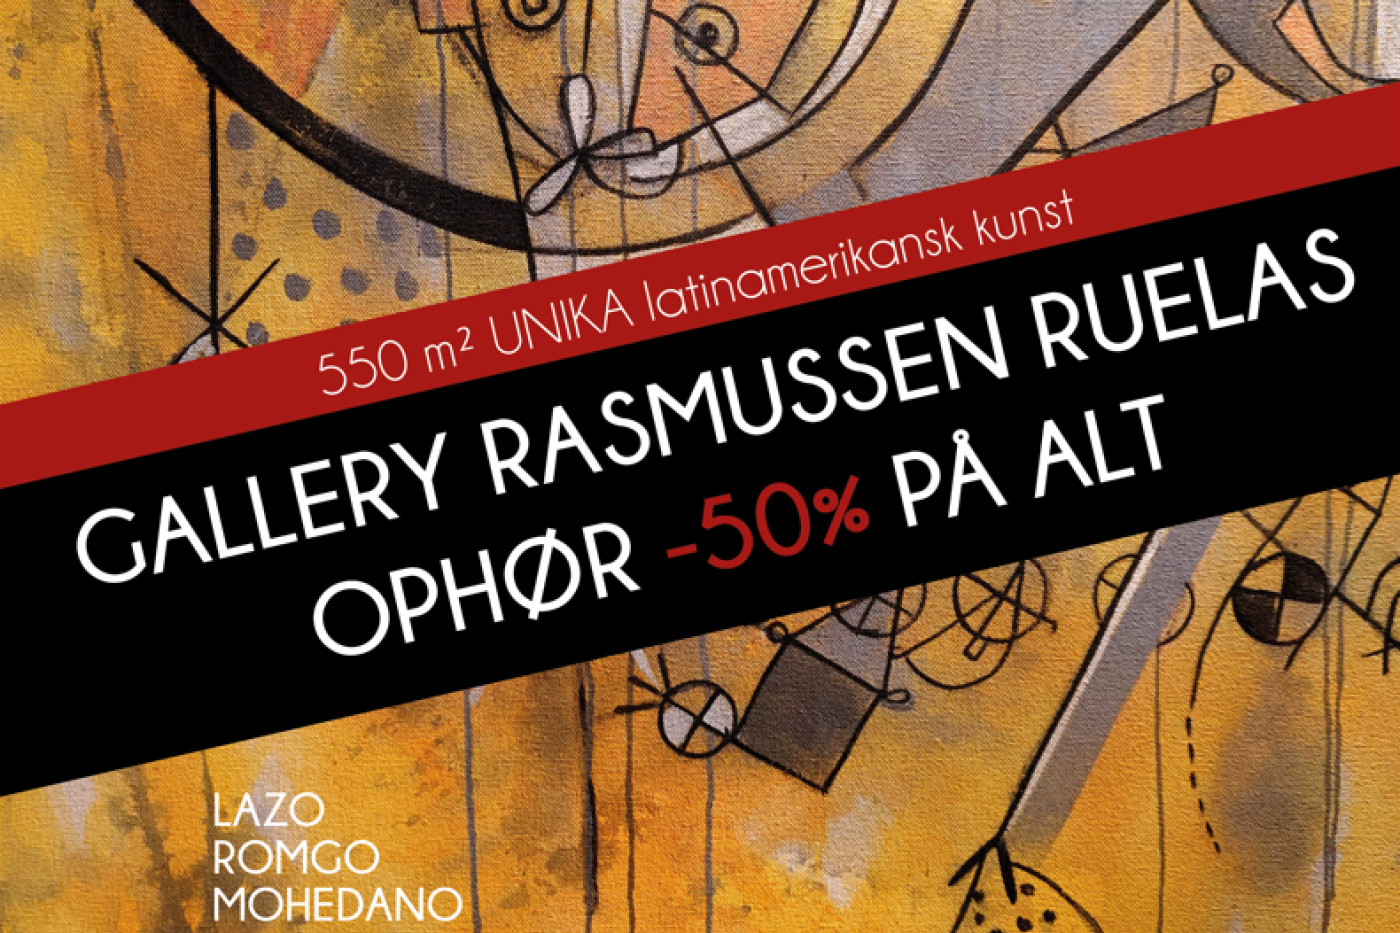 Gallery Rasmussen Ruelas Ophørssalg